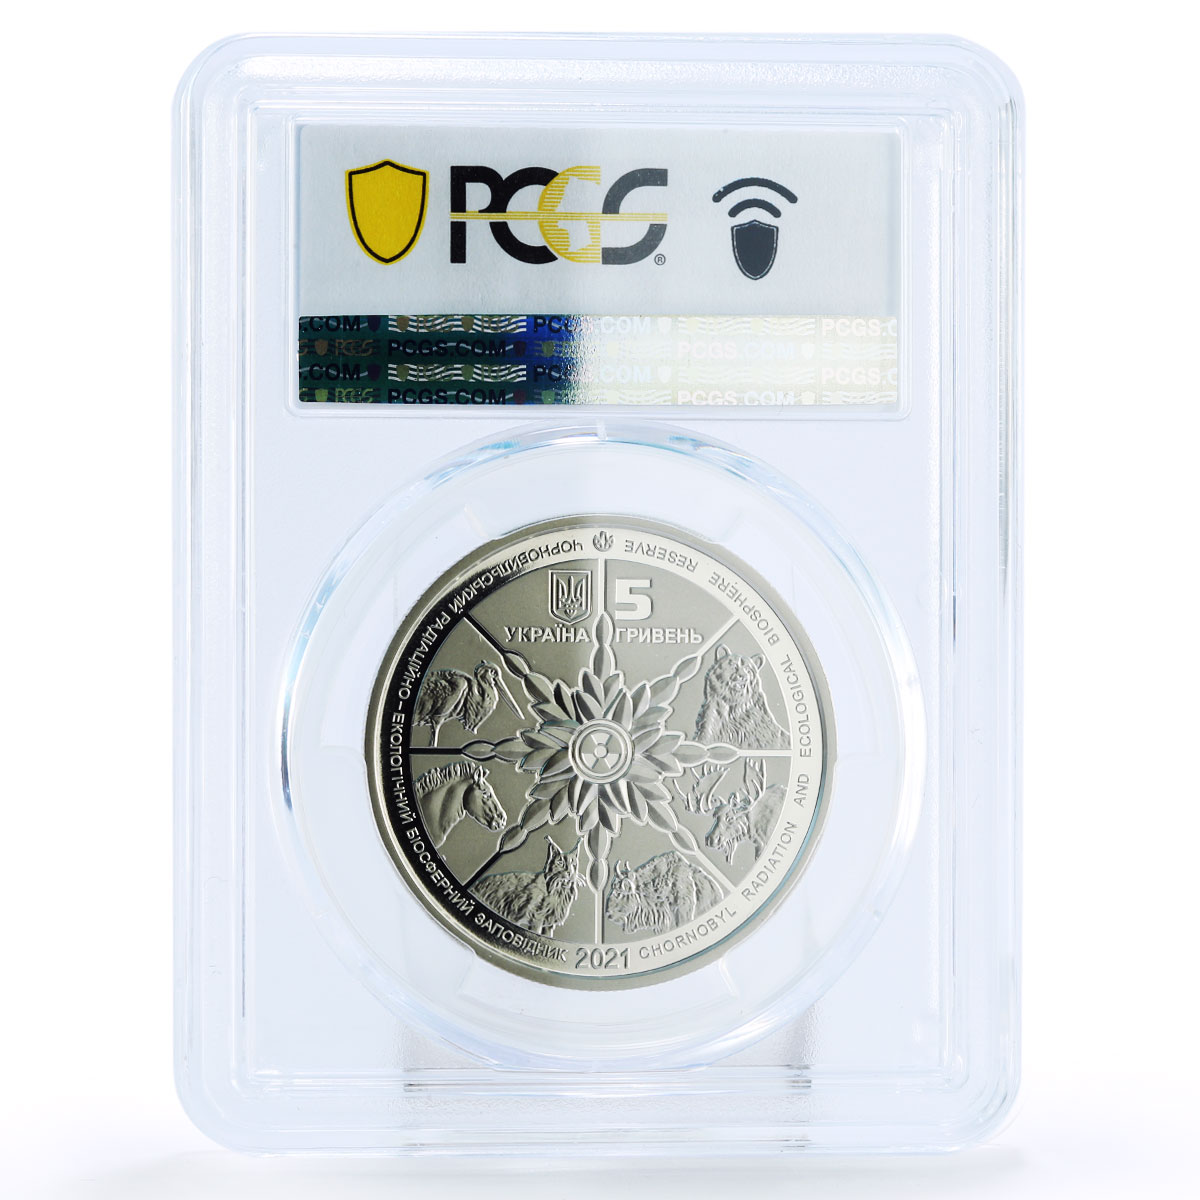 Ukraine 5 hryvnias Chernobyl Reserve Przewalski Horse MS69 PCGS CuNi coin 2021